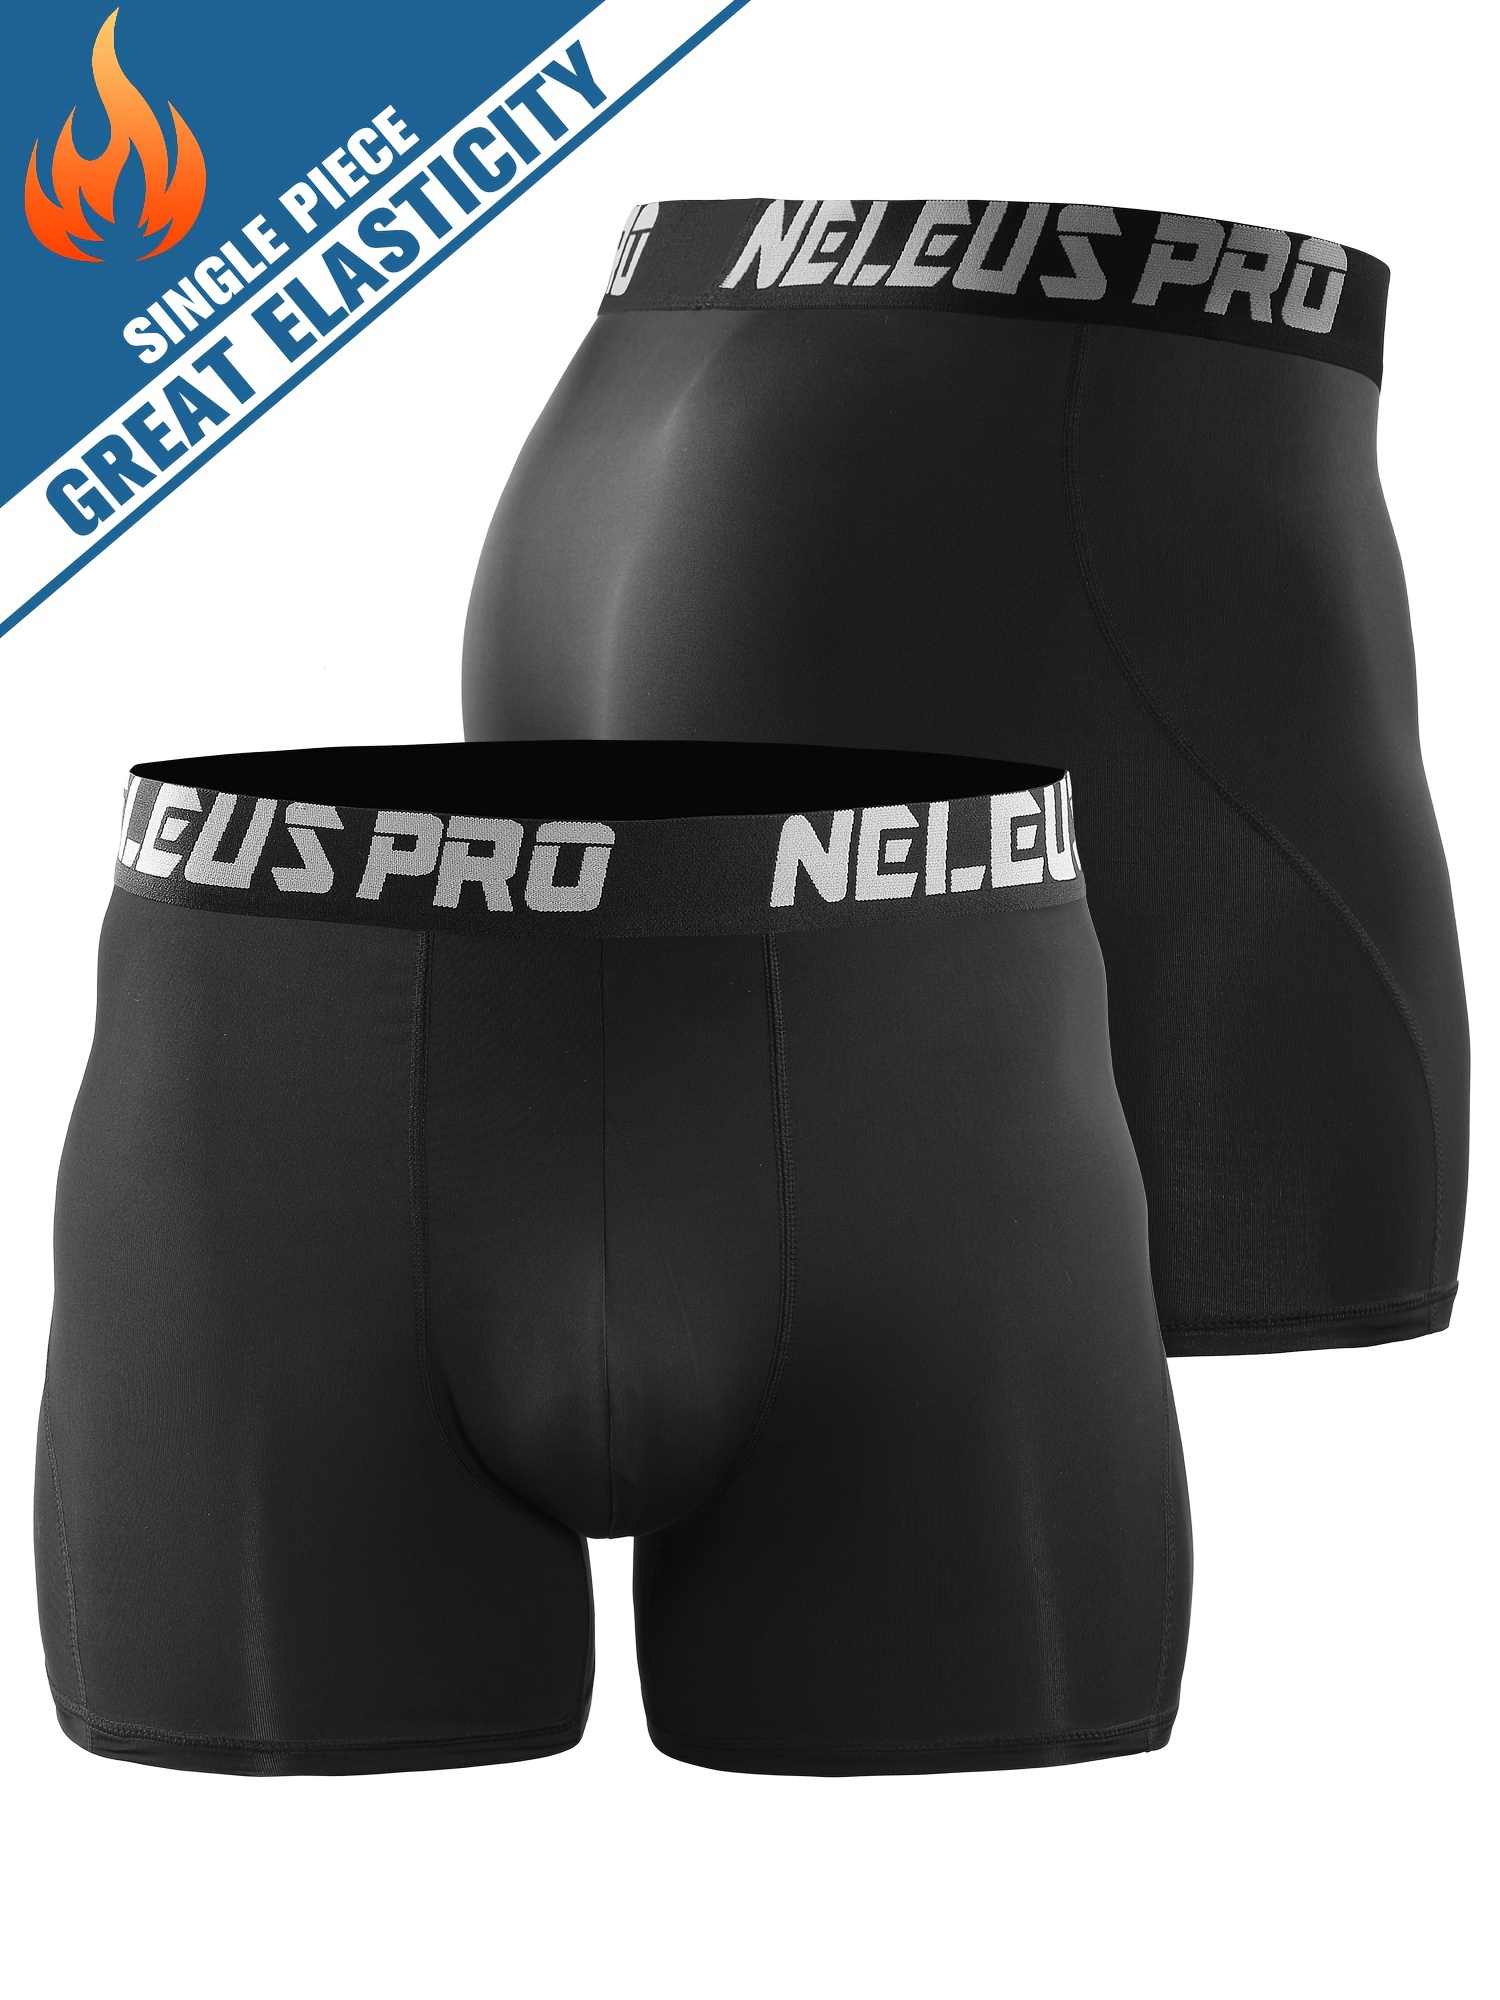 Neleus Pro Gray Compression Pants Shorts Athletic Sports Running